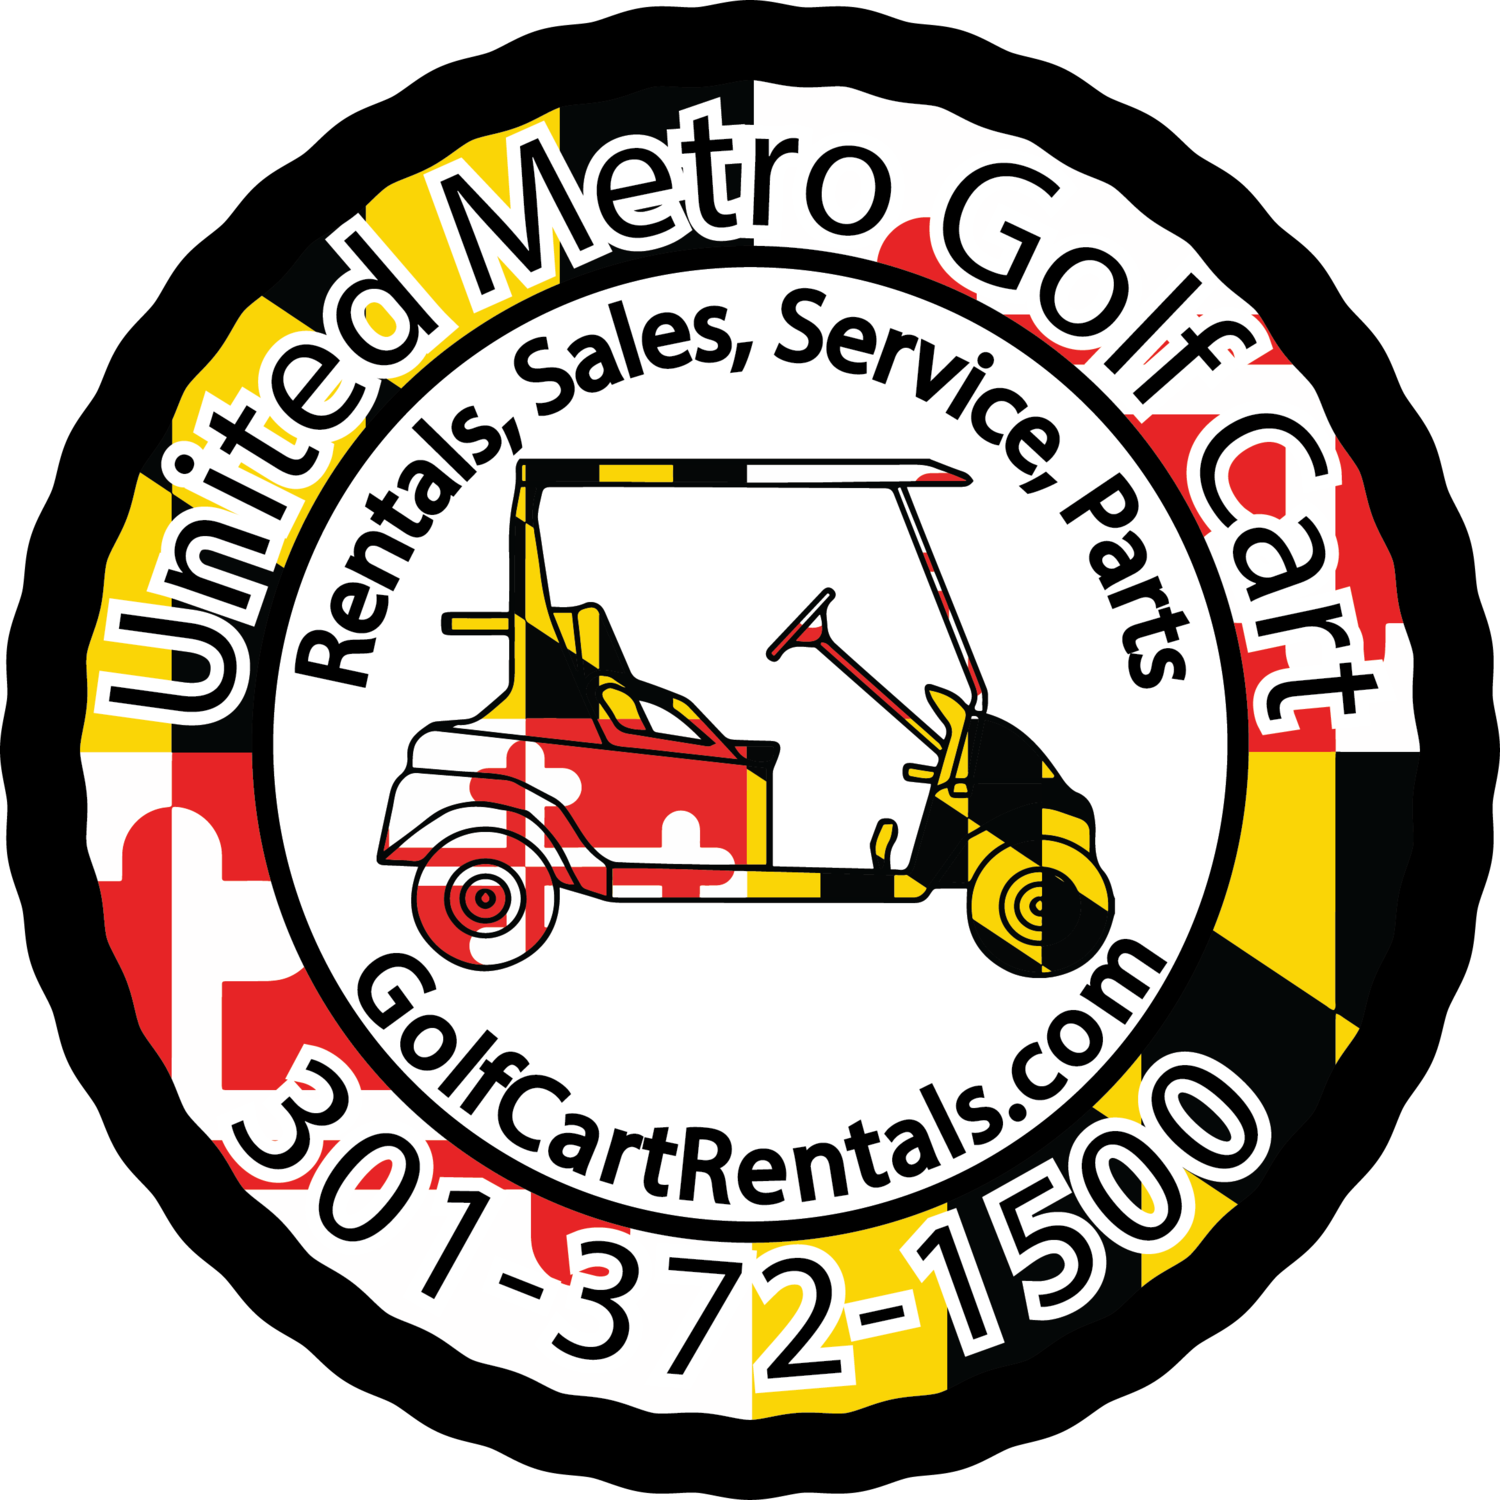 United Metro Golf Cart